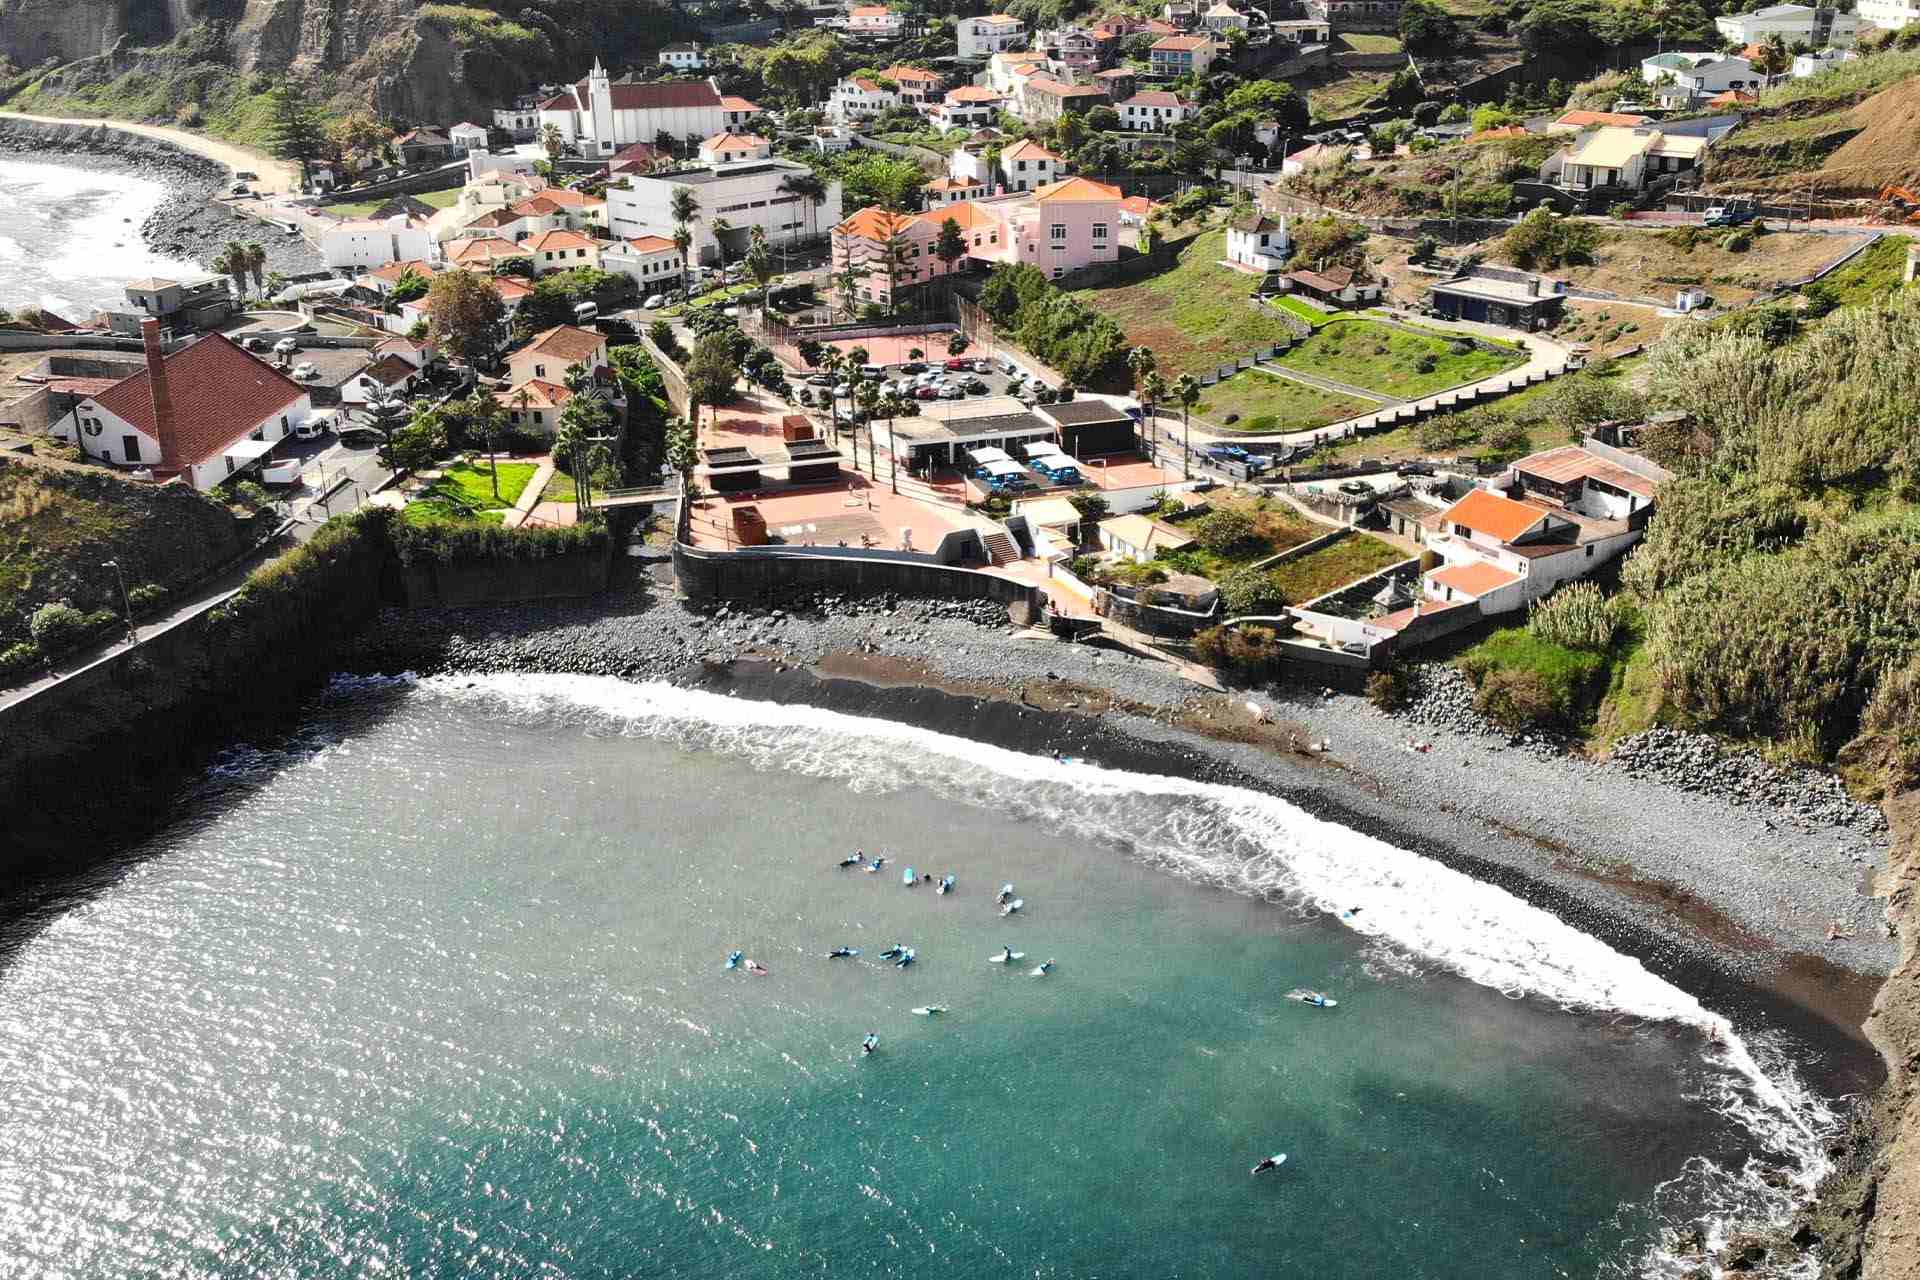 Madeira Island